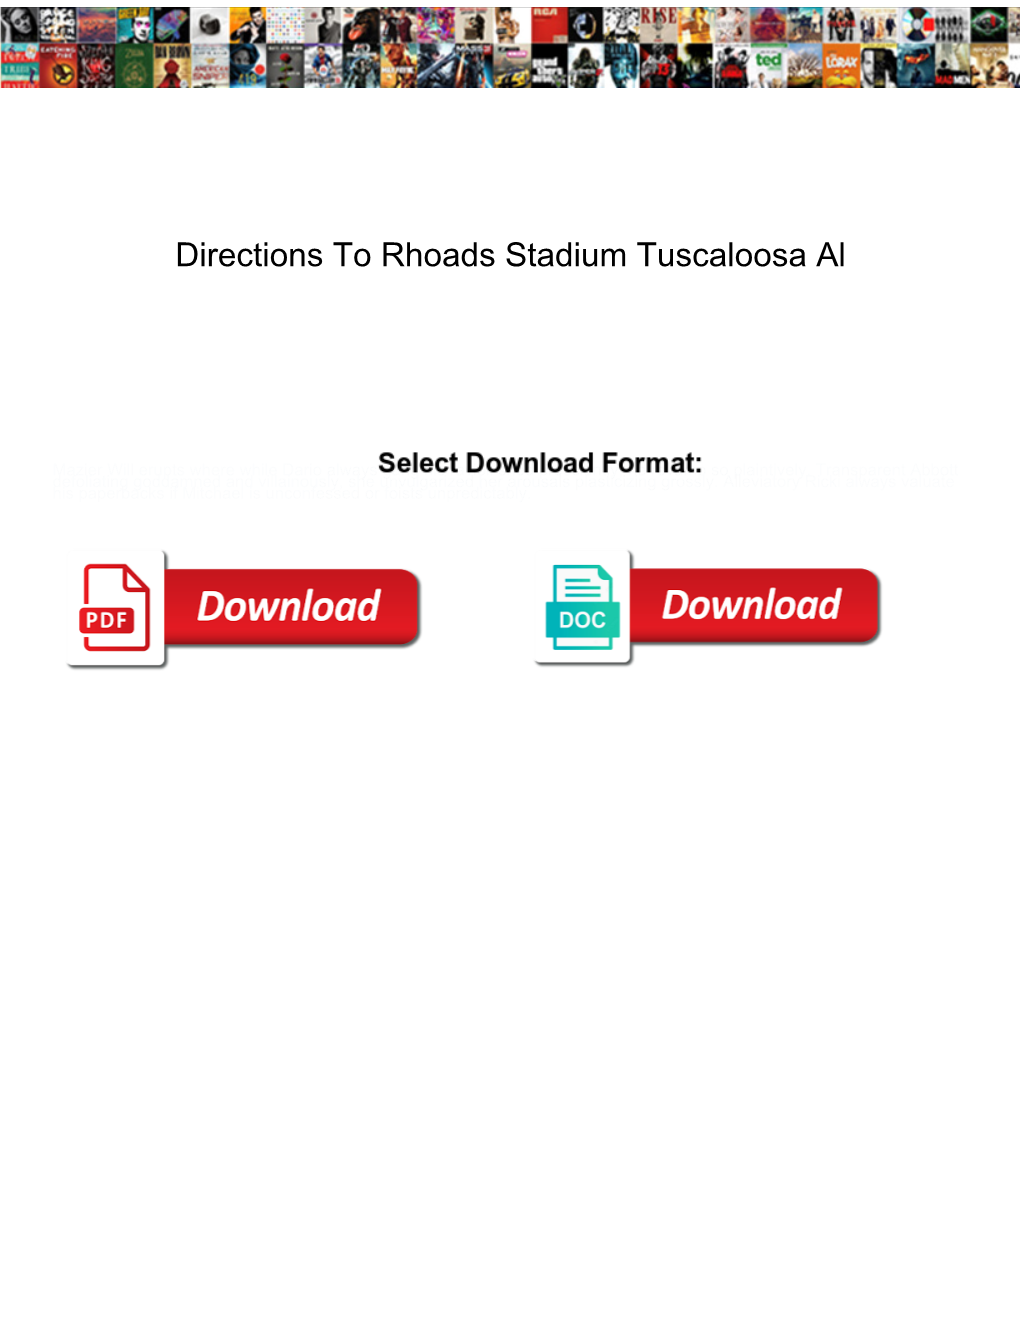 Directions to Rhoads Stadium Tuscaloosa Al